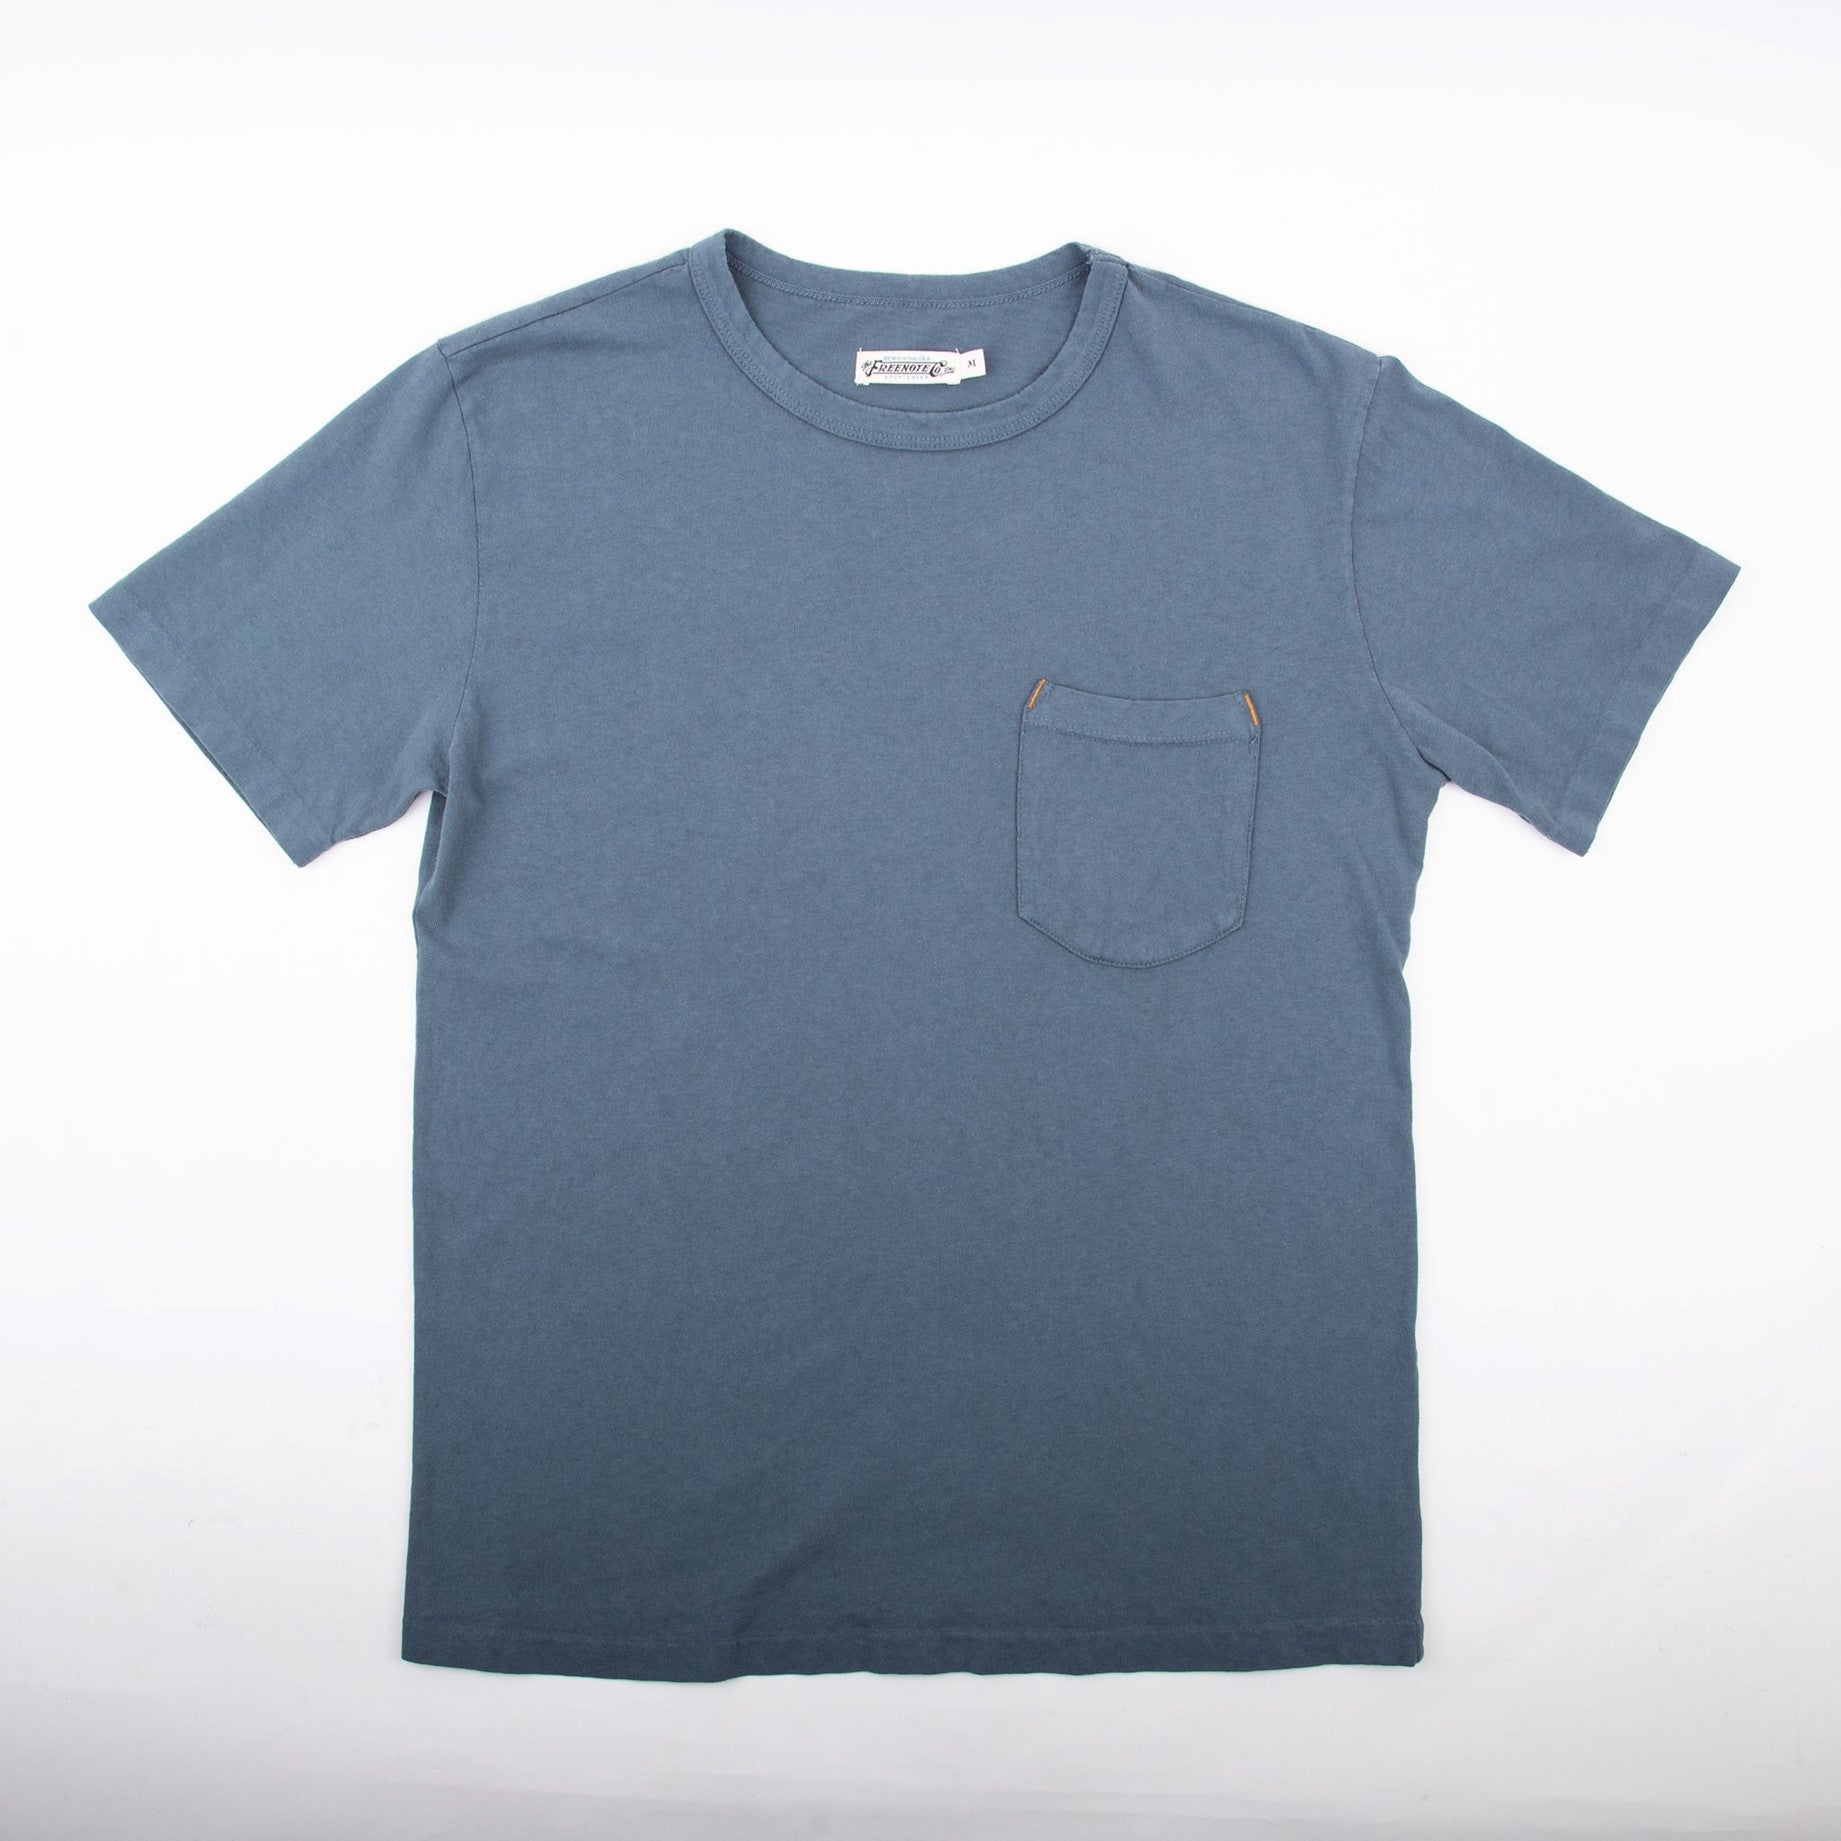 Navy T shirt 9 oz Freenote